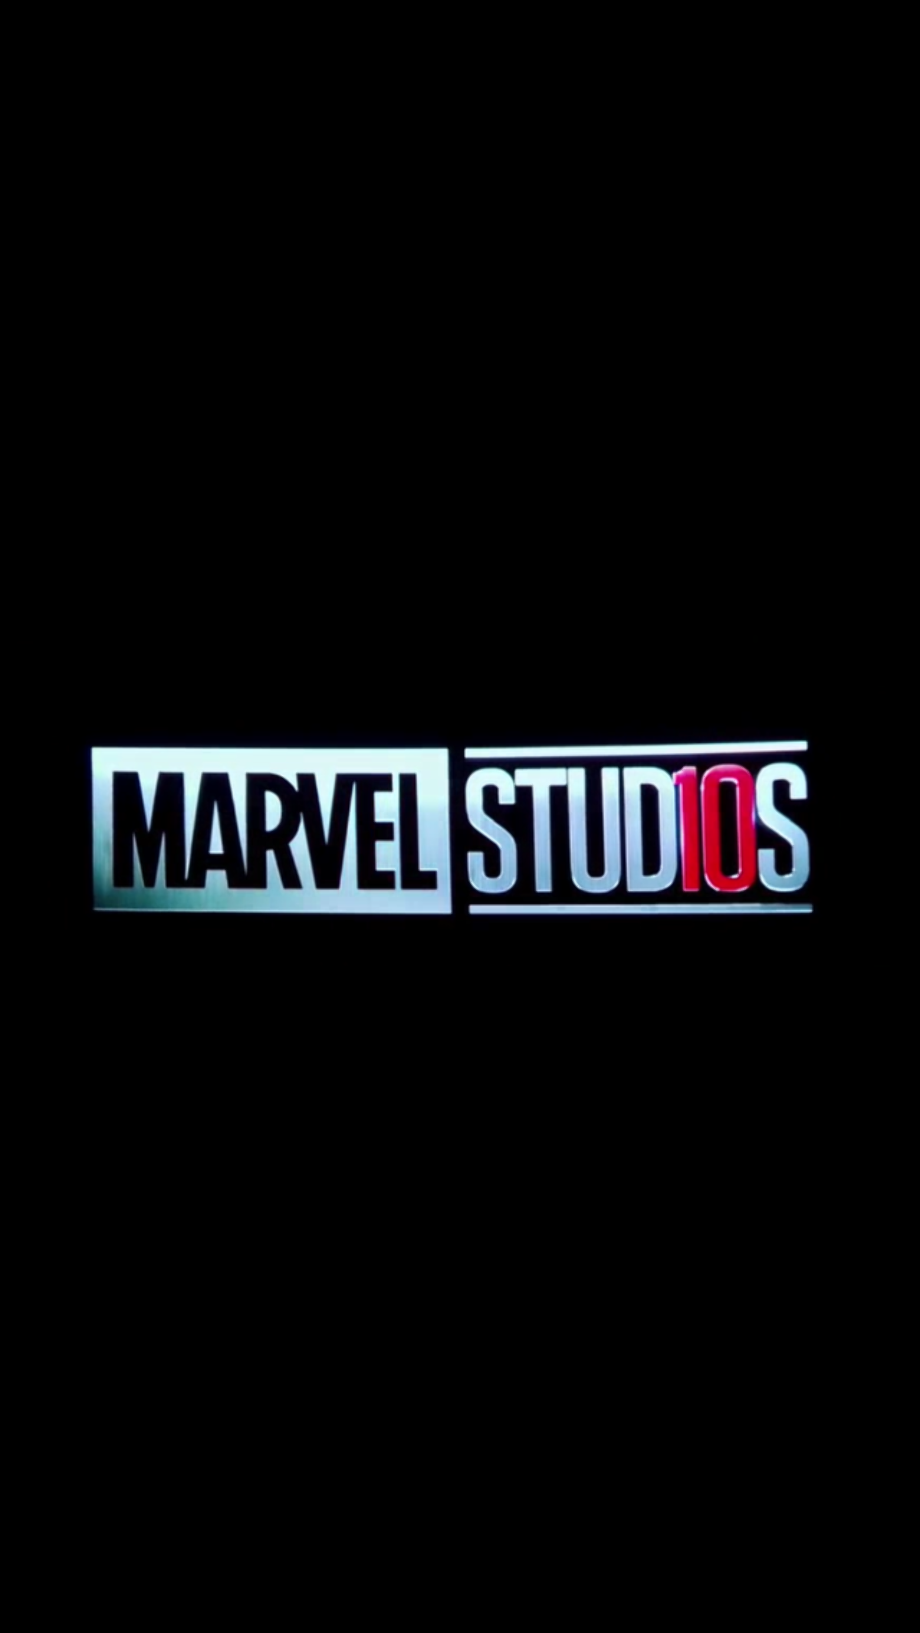 marvel studios logo animated